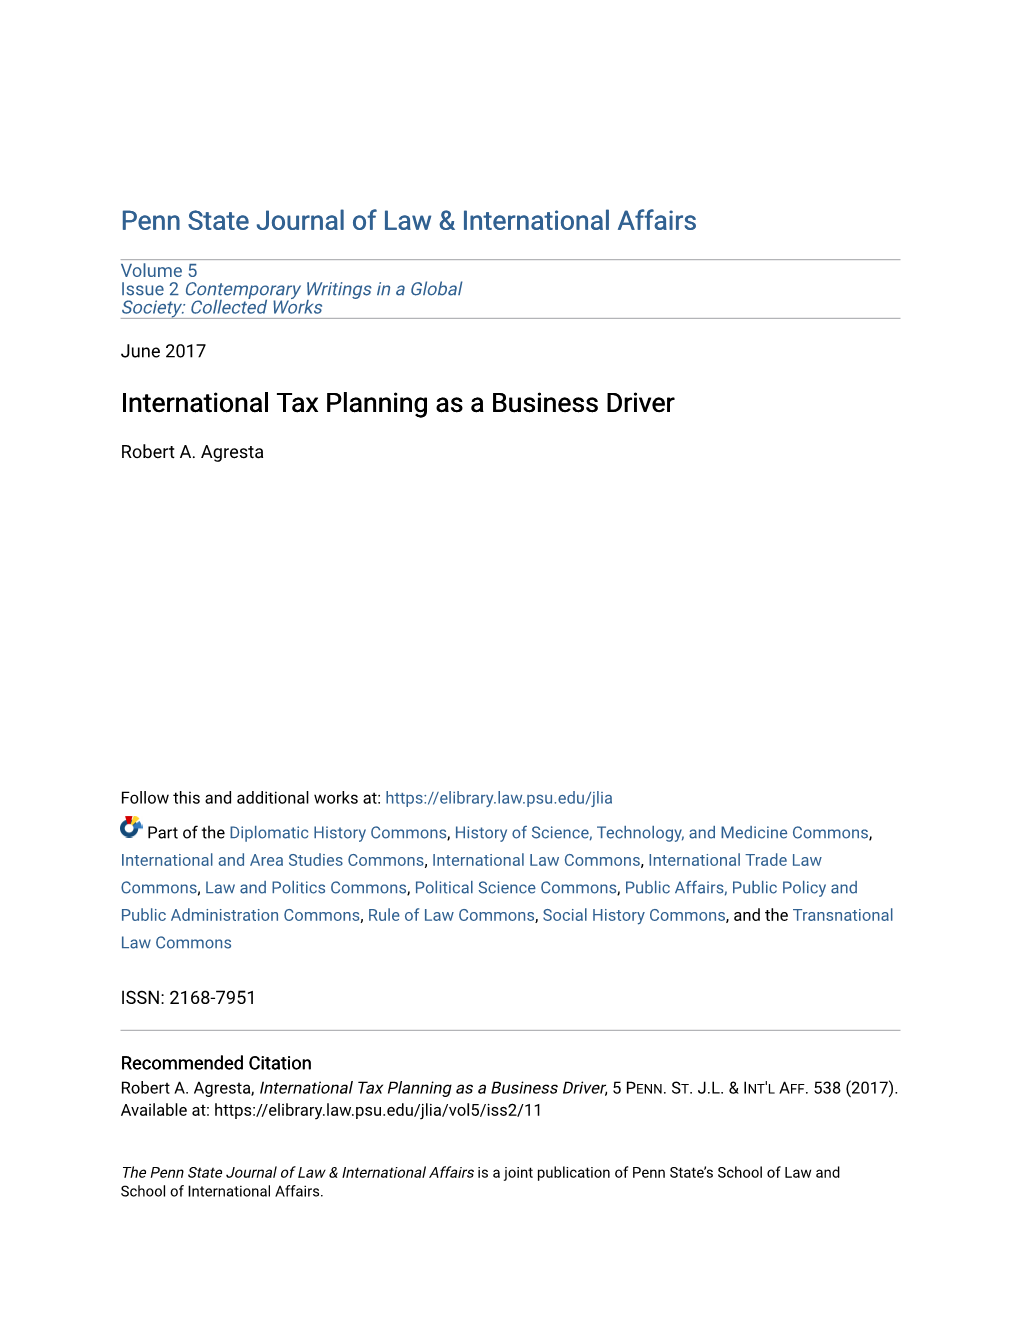 International Tax Planning As a Business Driver